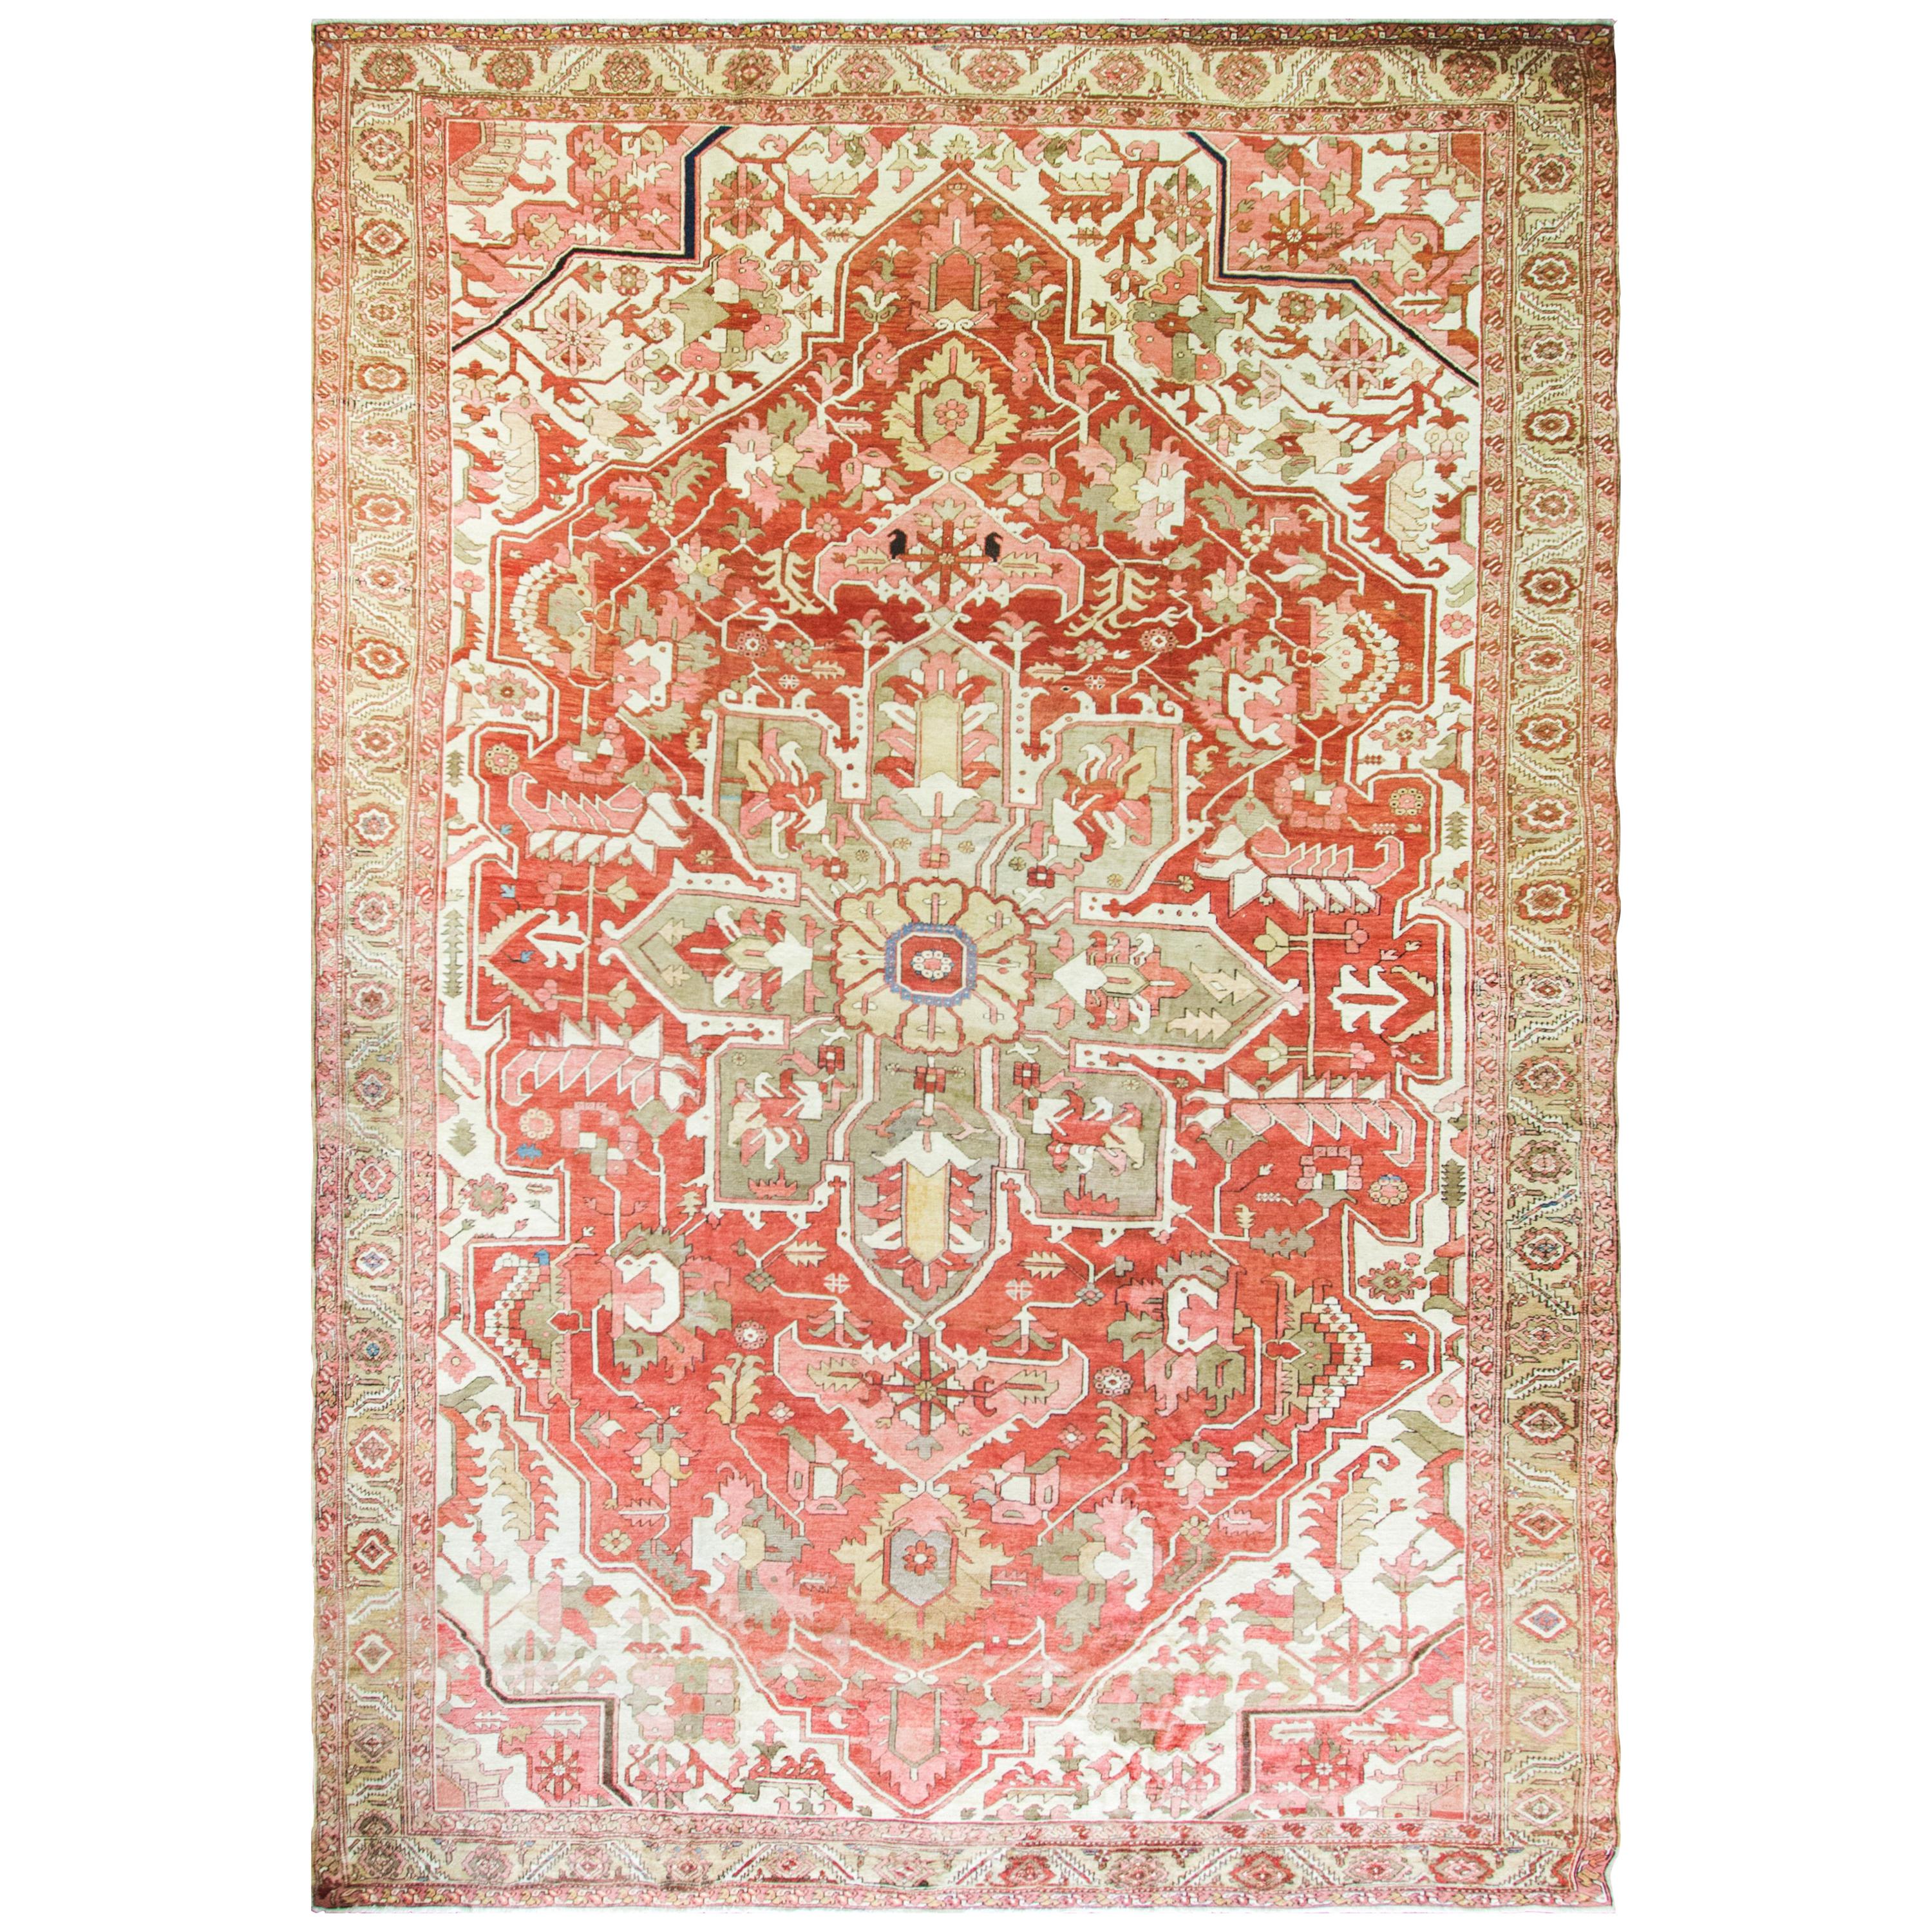  Antique Persian Serapi Carpet For Sale